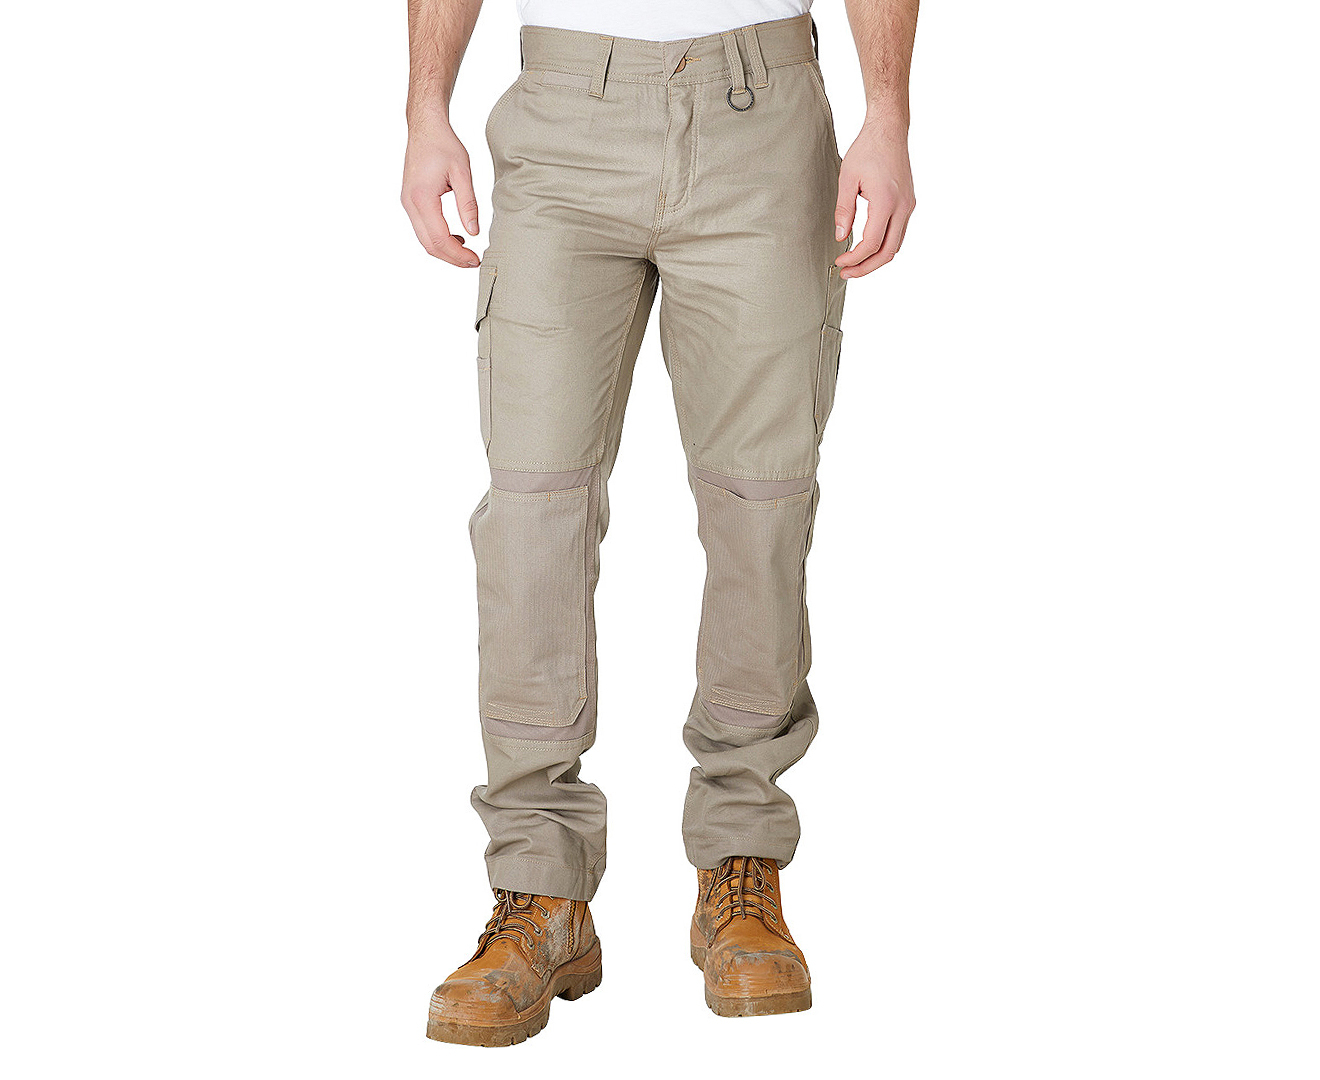 Elwood Workwear Men's Utility Pants - Stone | Www.catch.co.nz